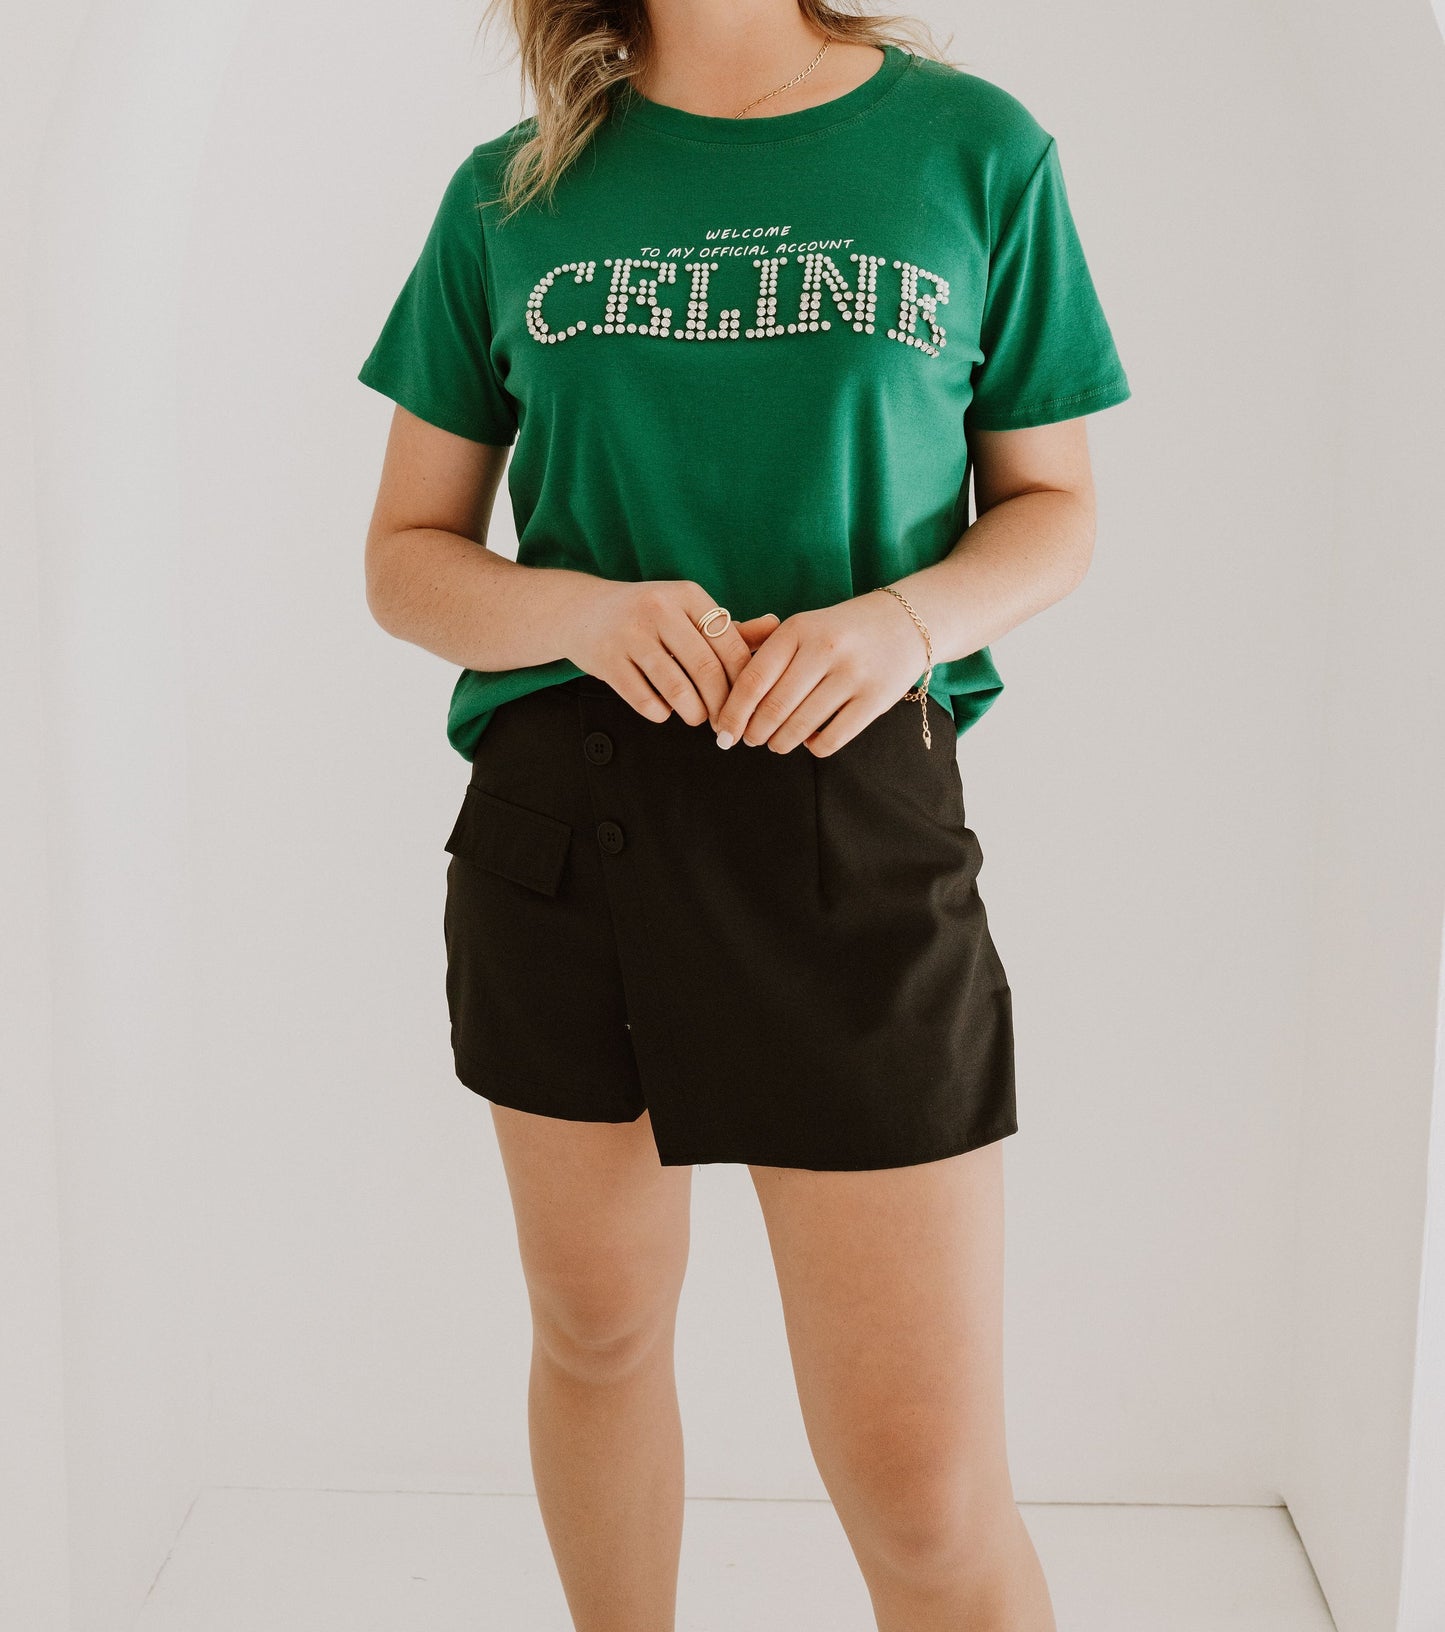 Celine T-shirt hot green / grey